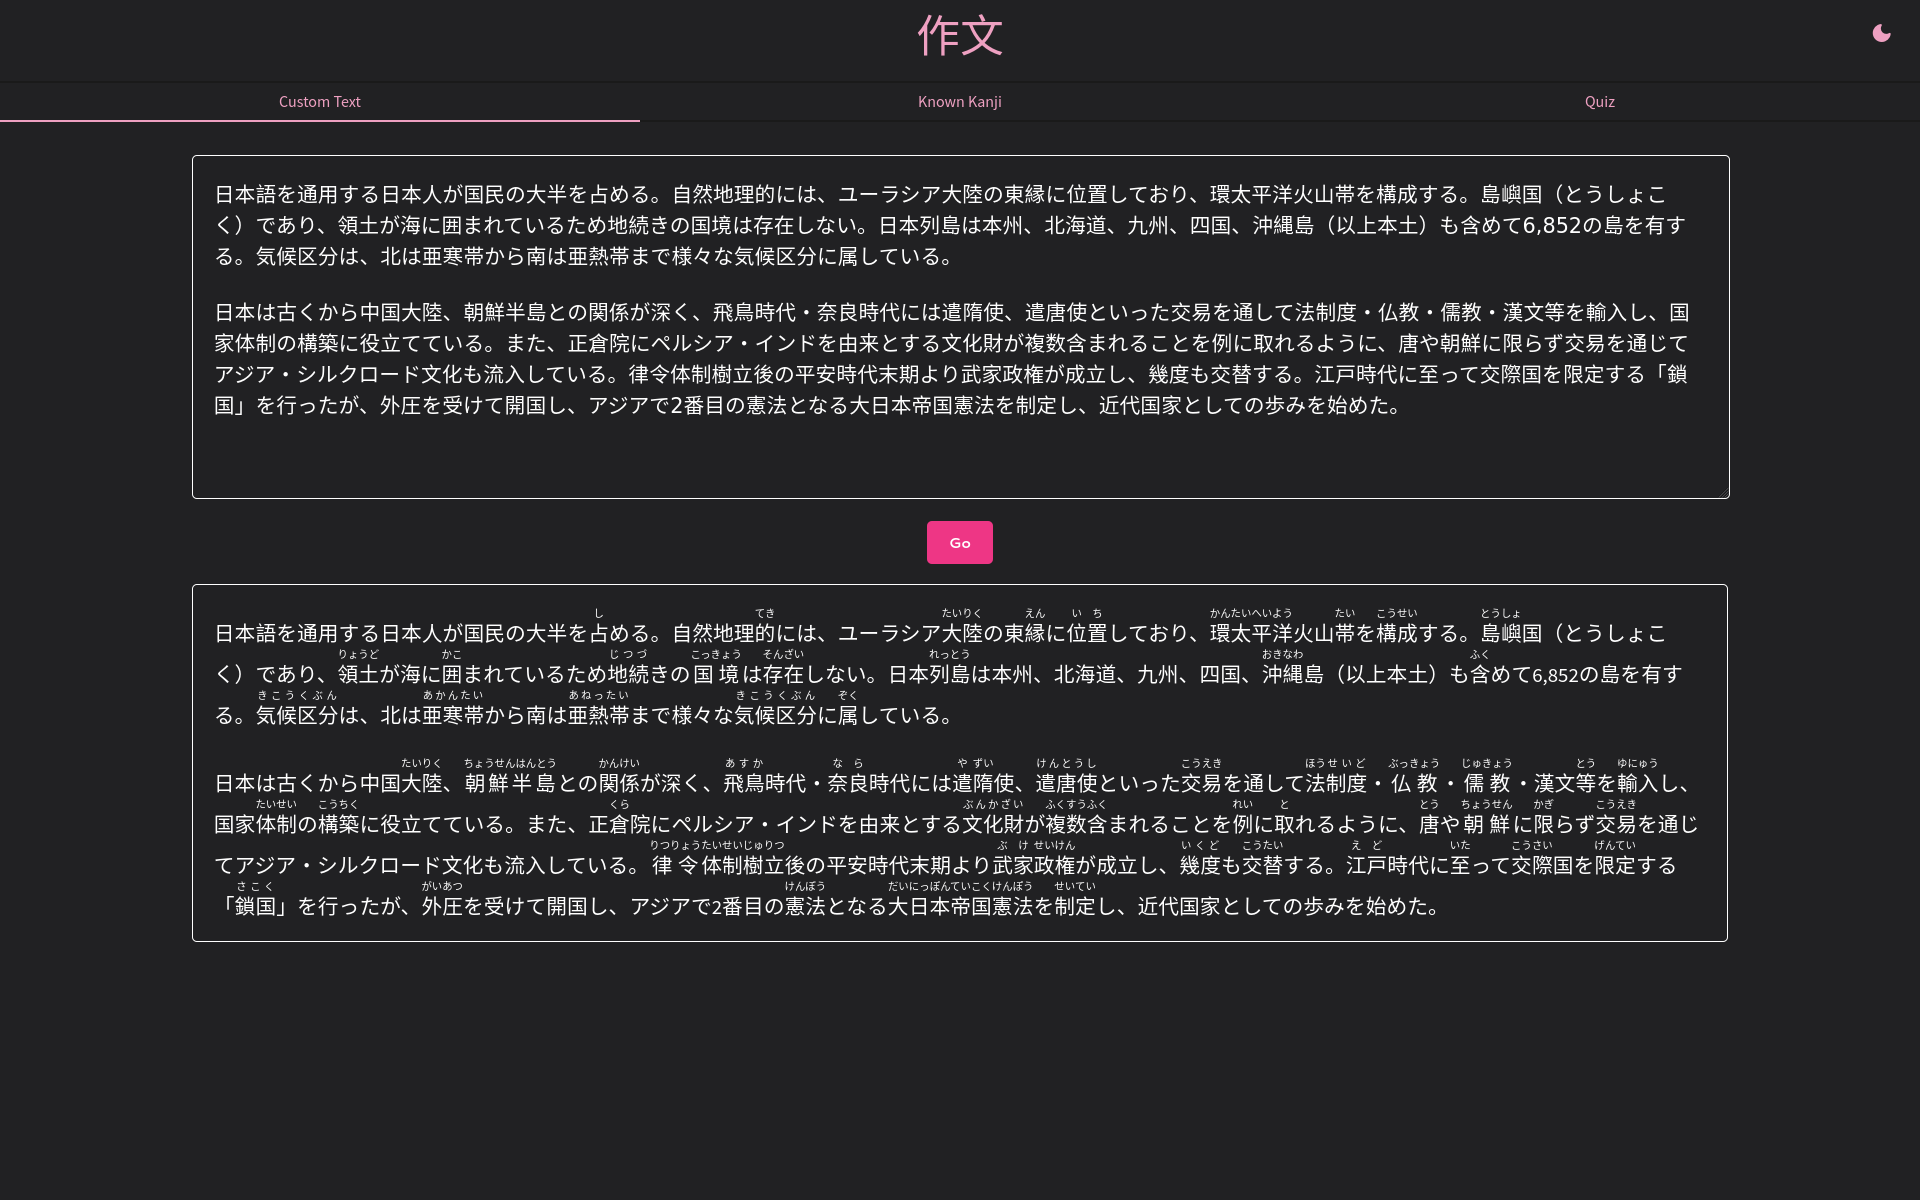 Custom text page, on desktop